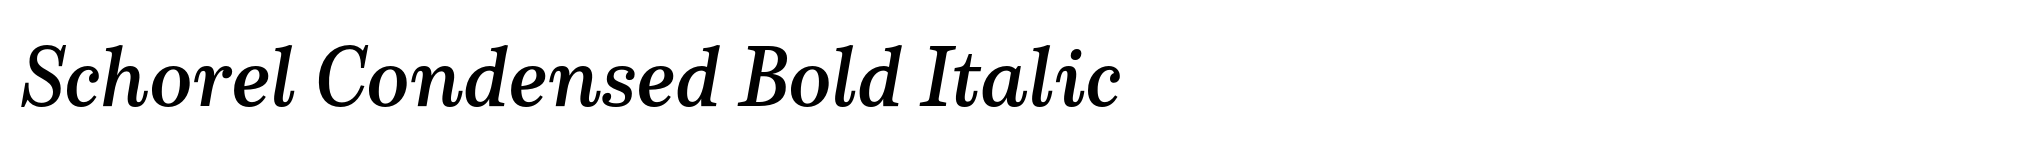 Schorel Condensed Bold Italic image